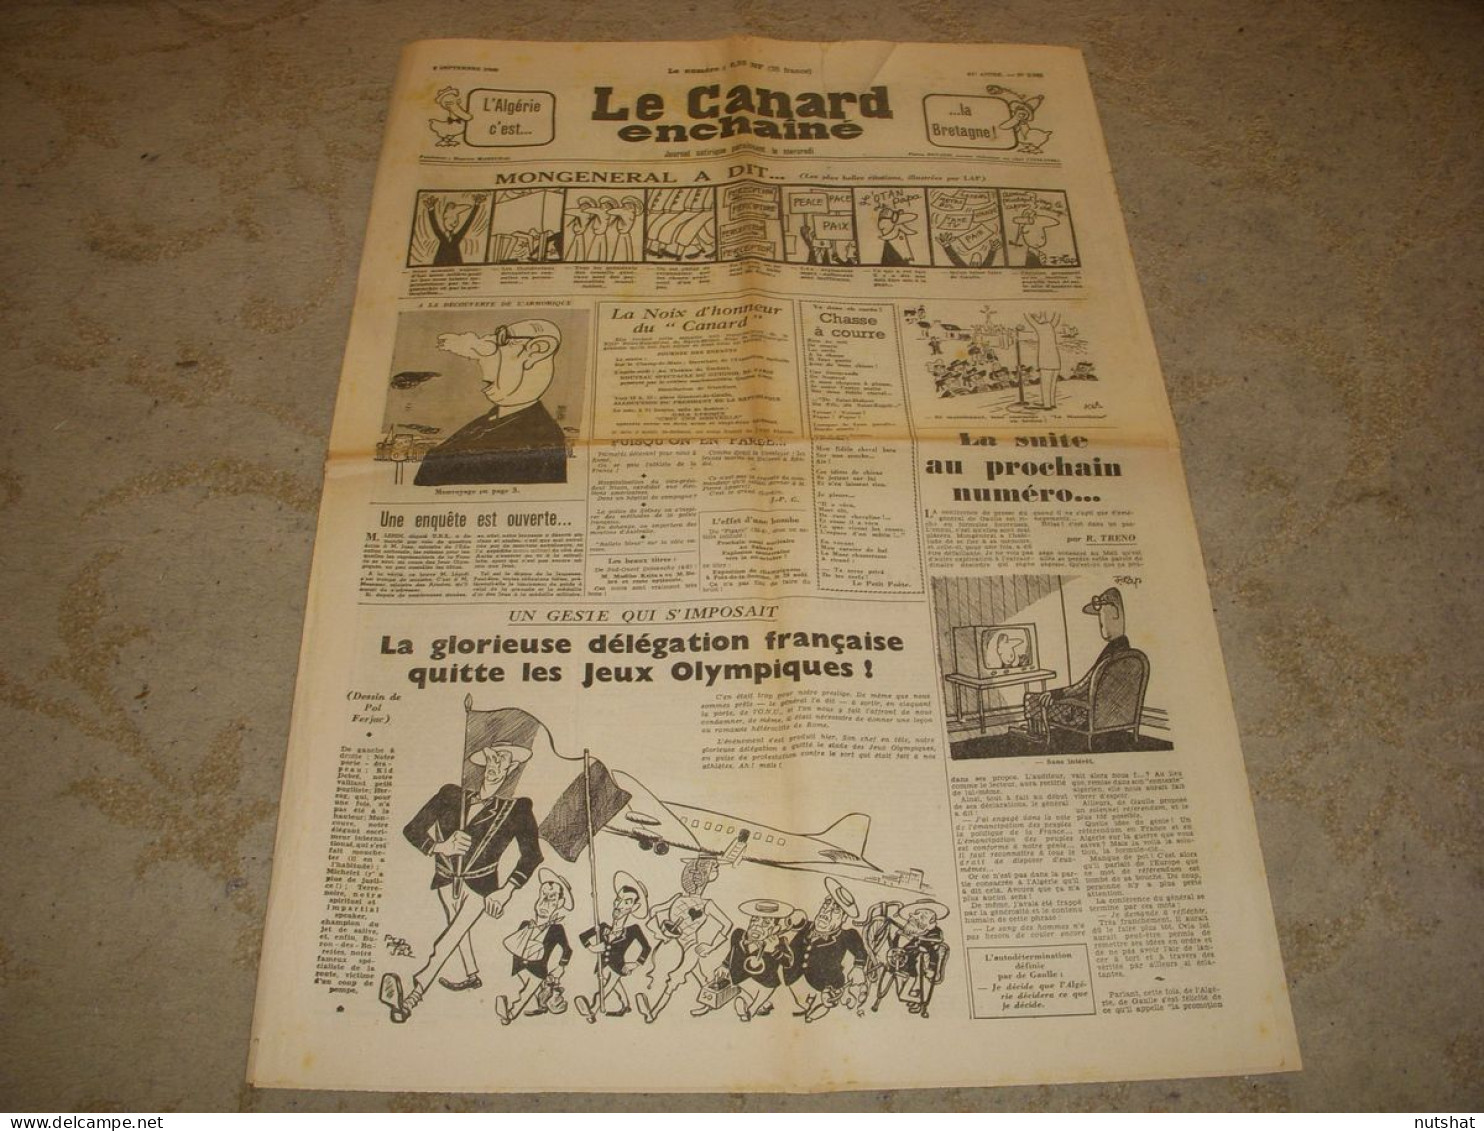 CANARD ENCHAINE 2081 07.09.1960 Jean NOHAIN Jean RIEUX Edna O'BRIEN L'OPUS DEI - Politica